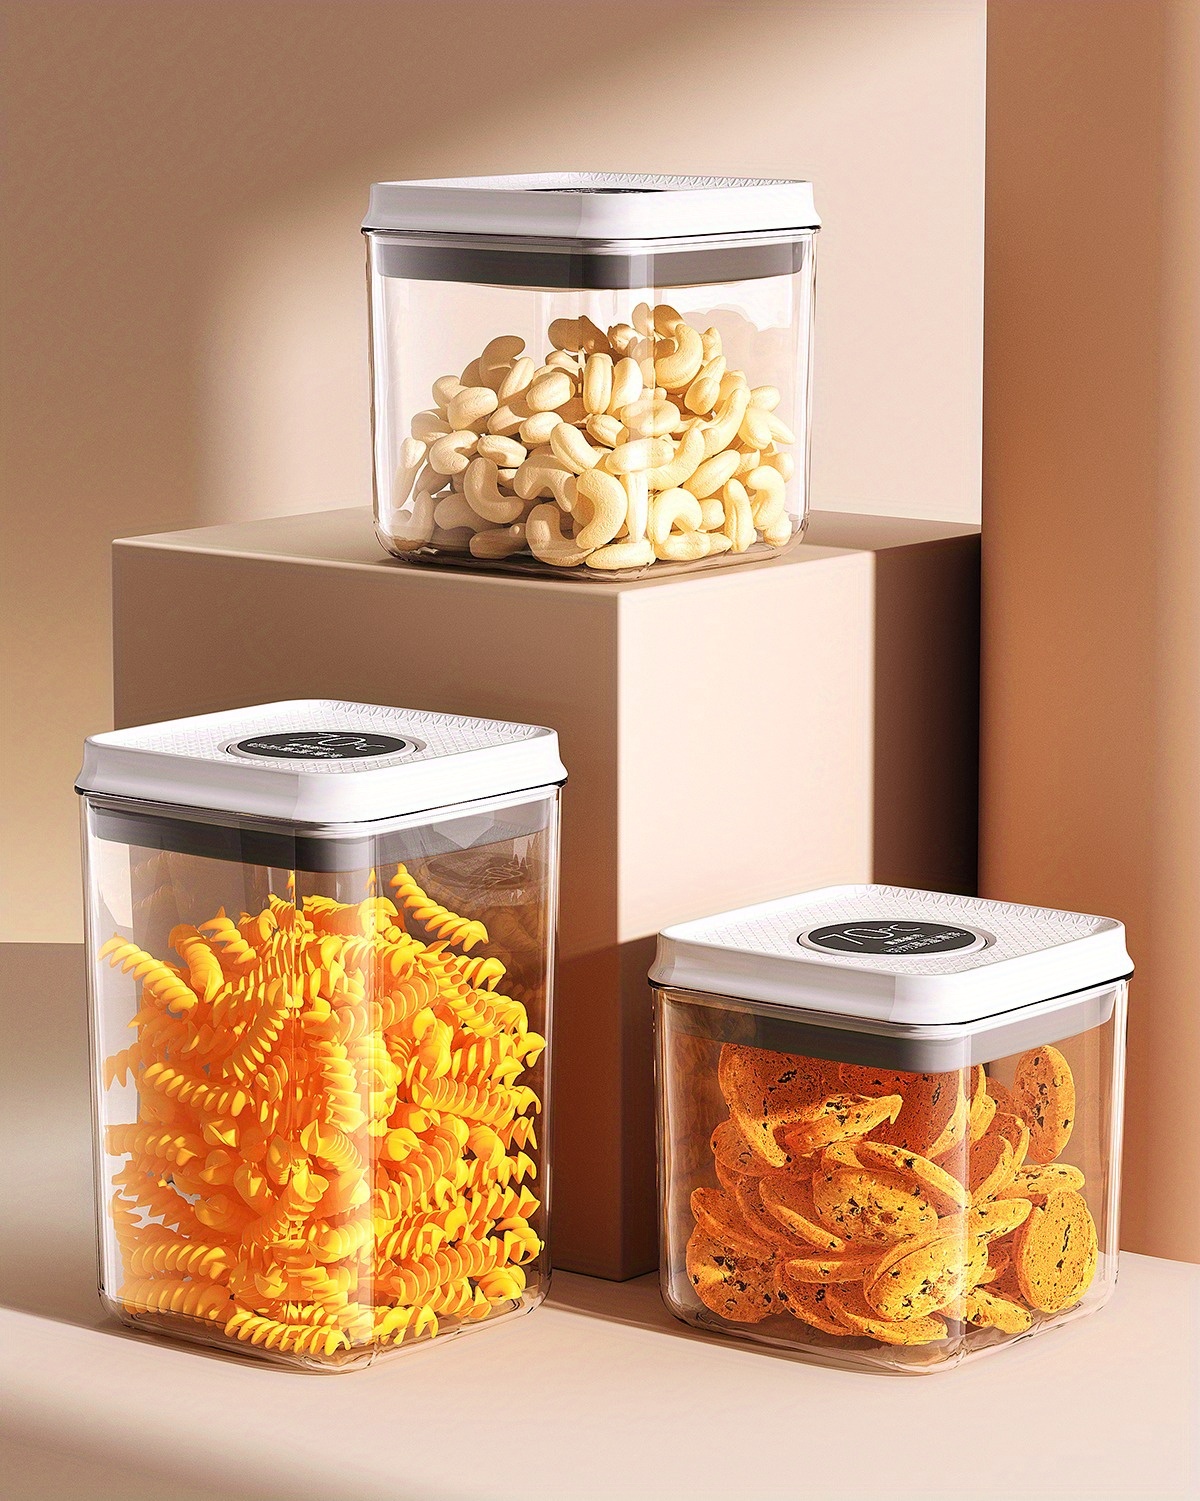 OMADA Acrylic Airtight Storage Container: Sugar Flour Container and Pasta  Container - Storage Jar for Food Toiletries Office Supplies - Dishwasher